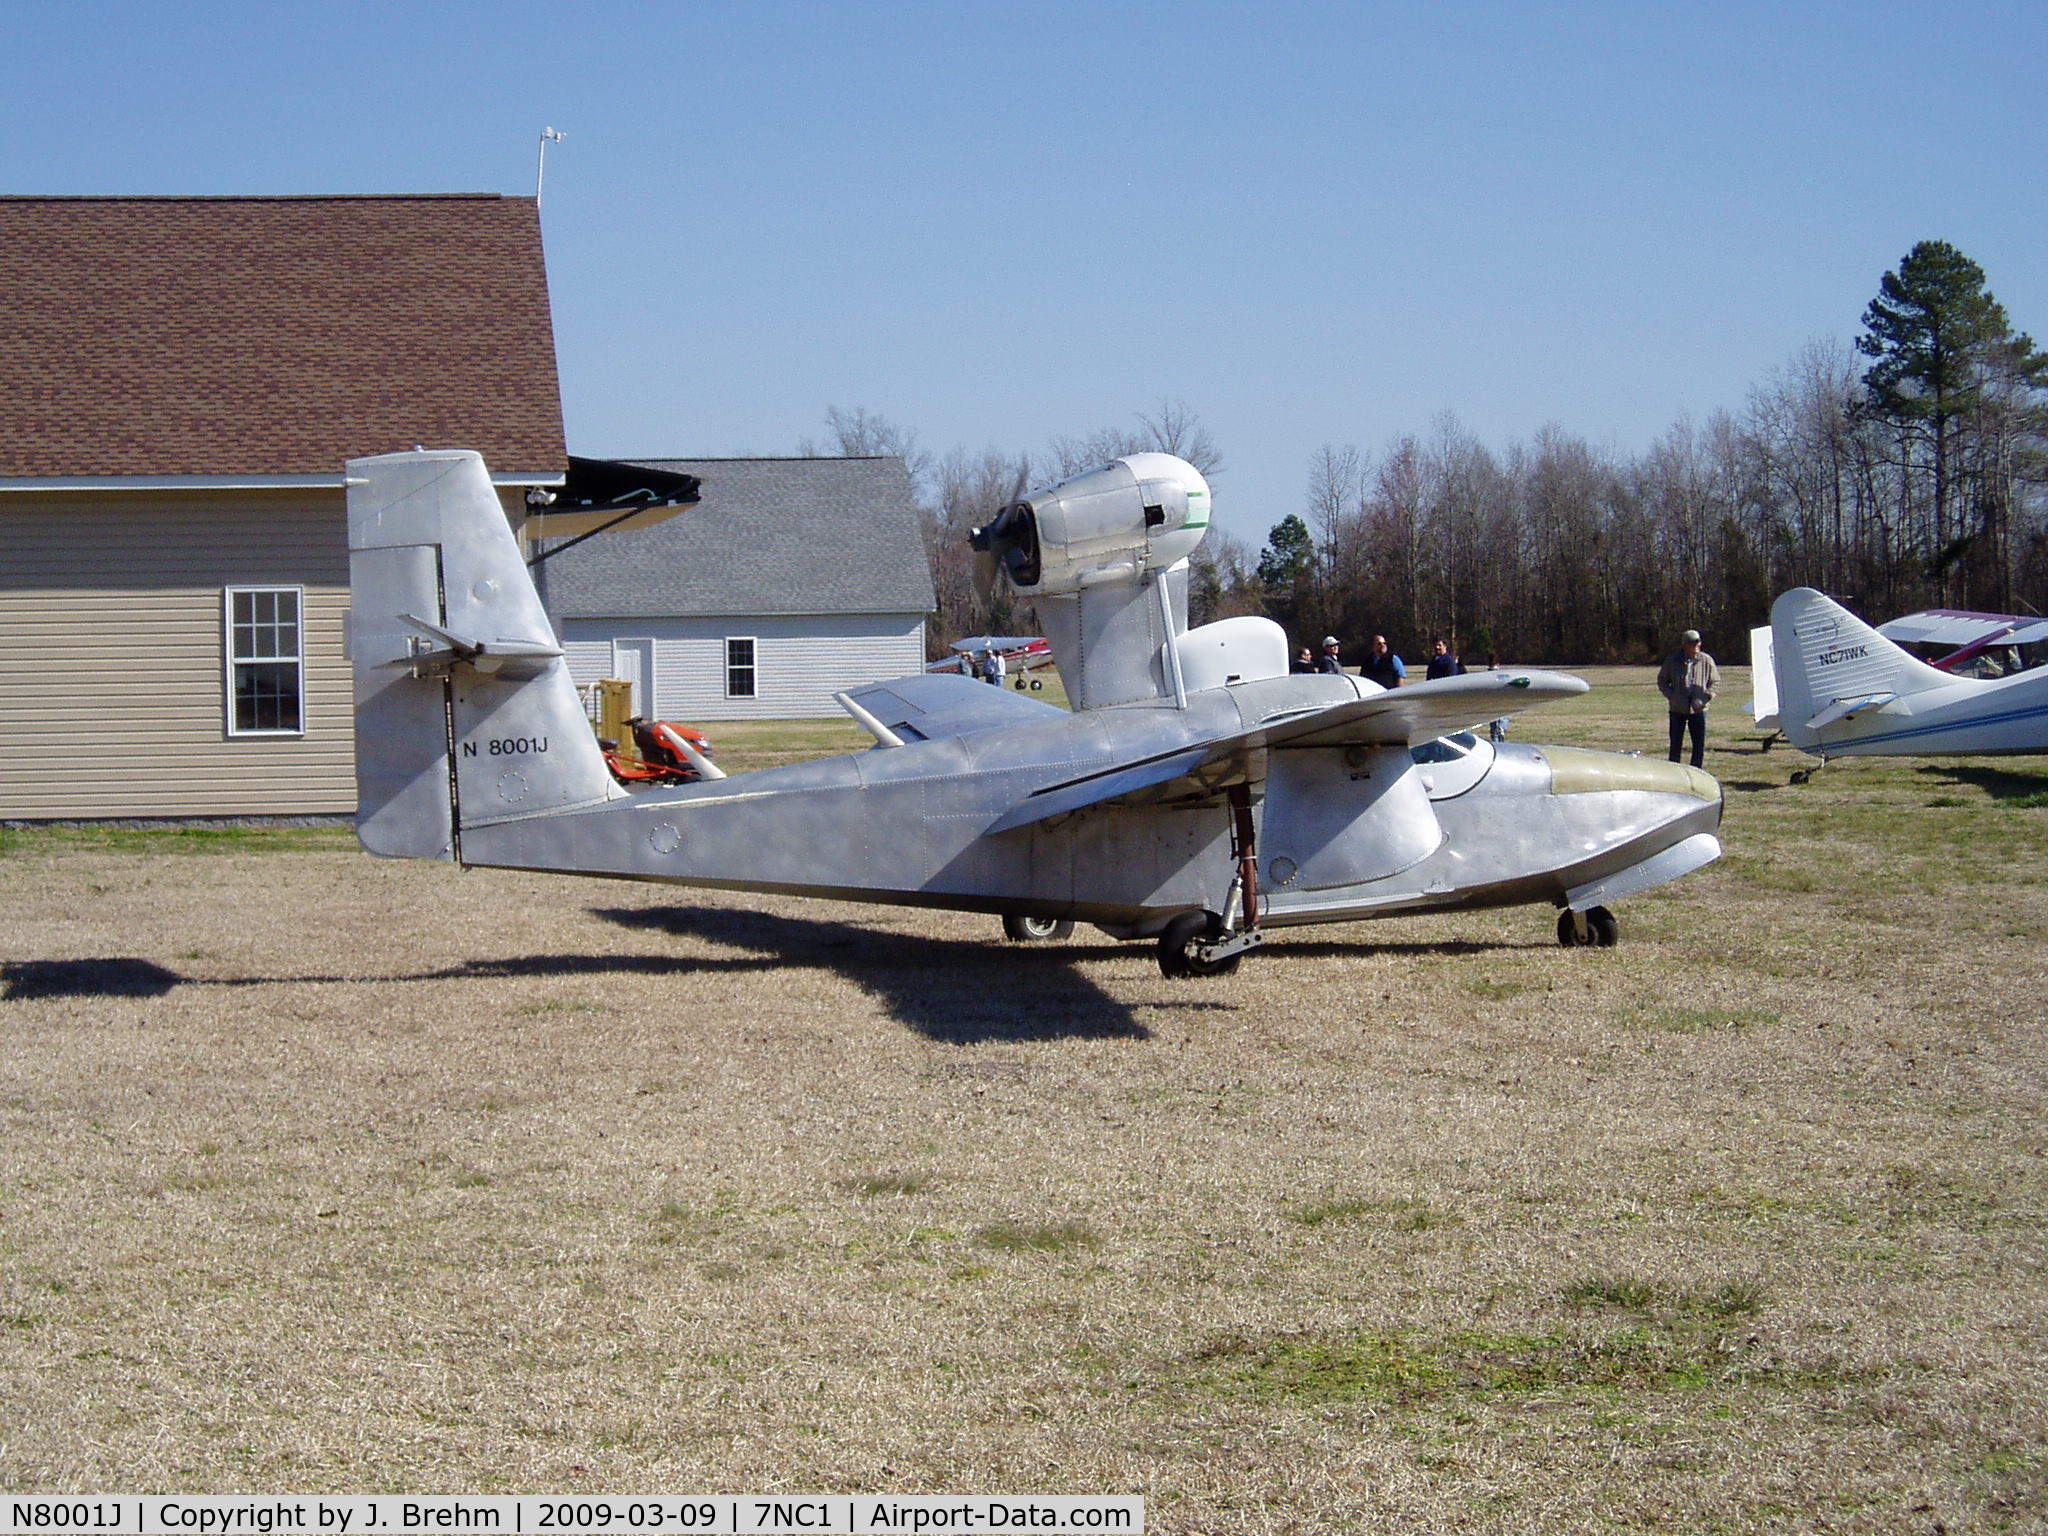 N8001J, 1979 Consolidated Aeronautics Inc. LAKE LA-4-200 C/N 993, At Stag Air Park, NC